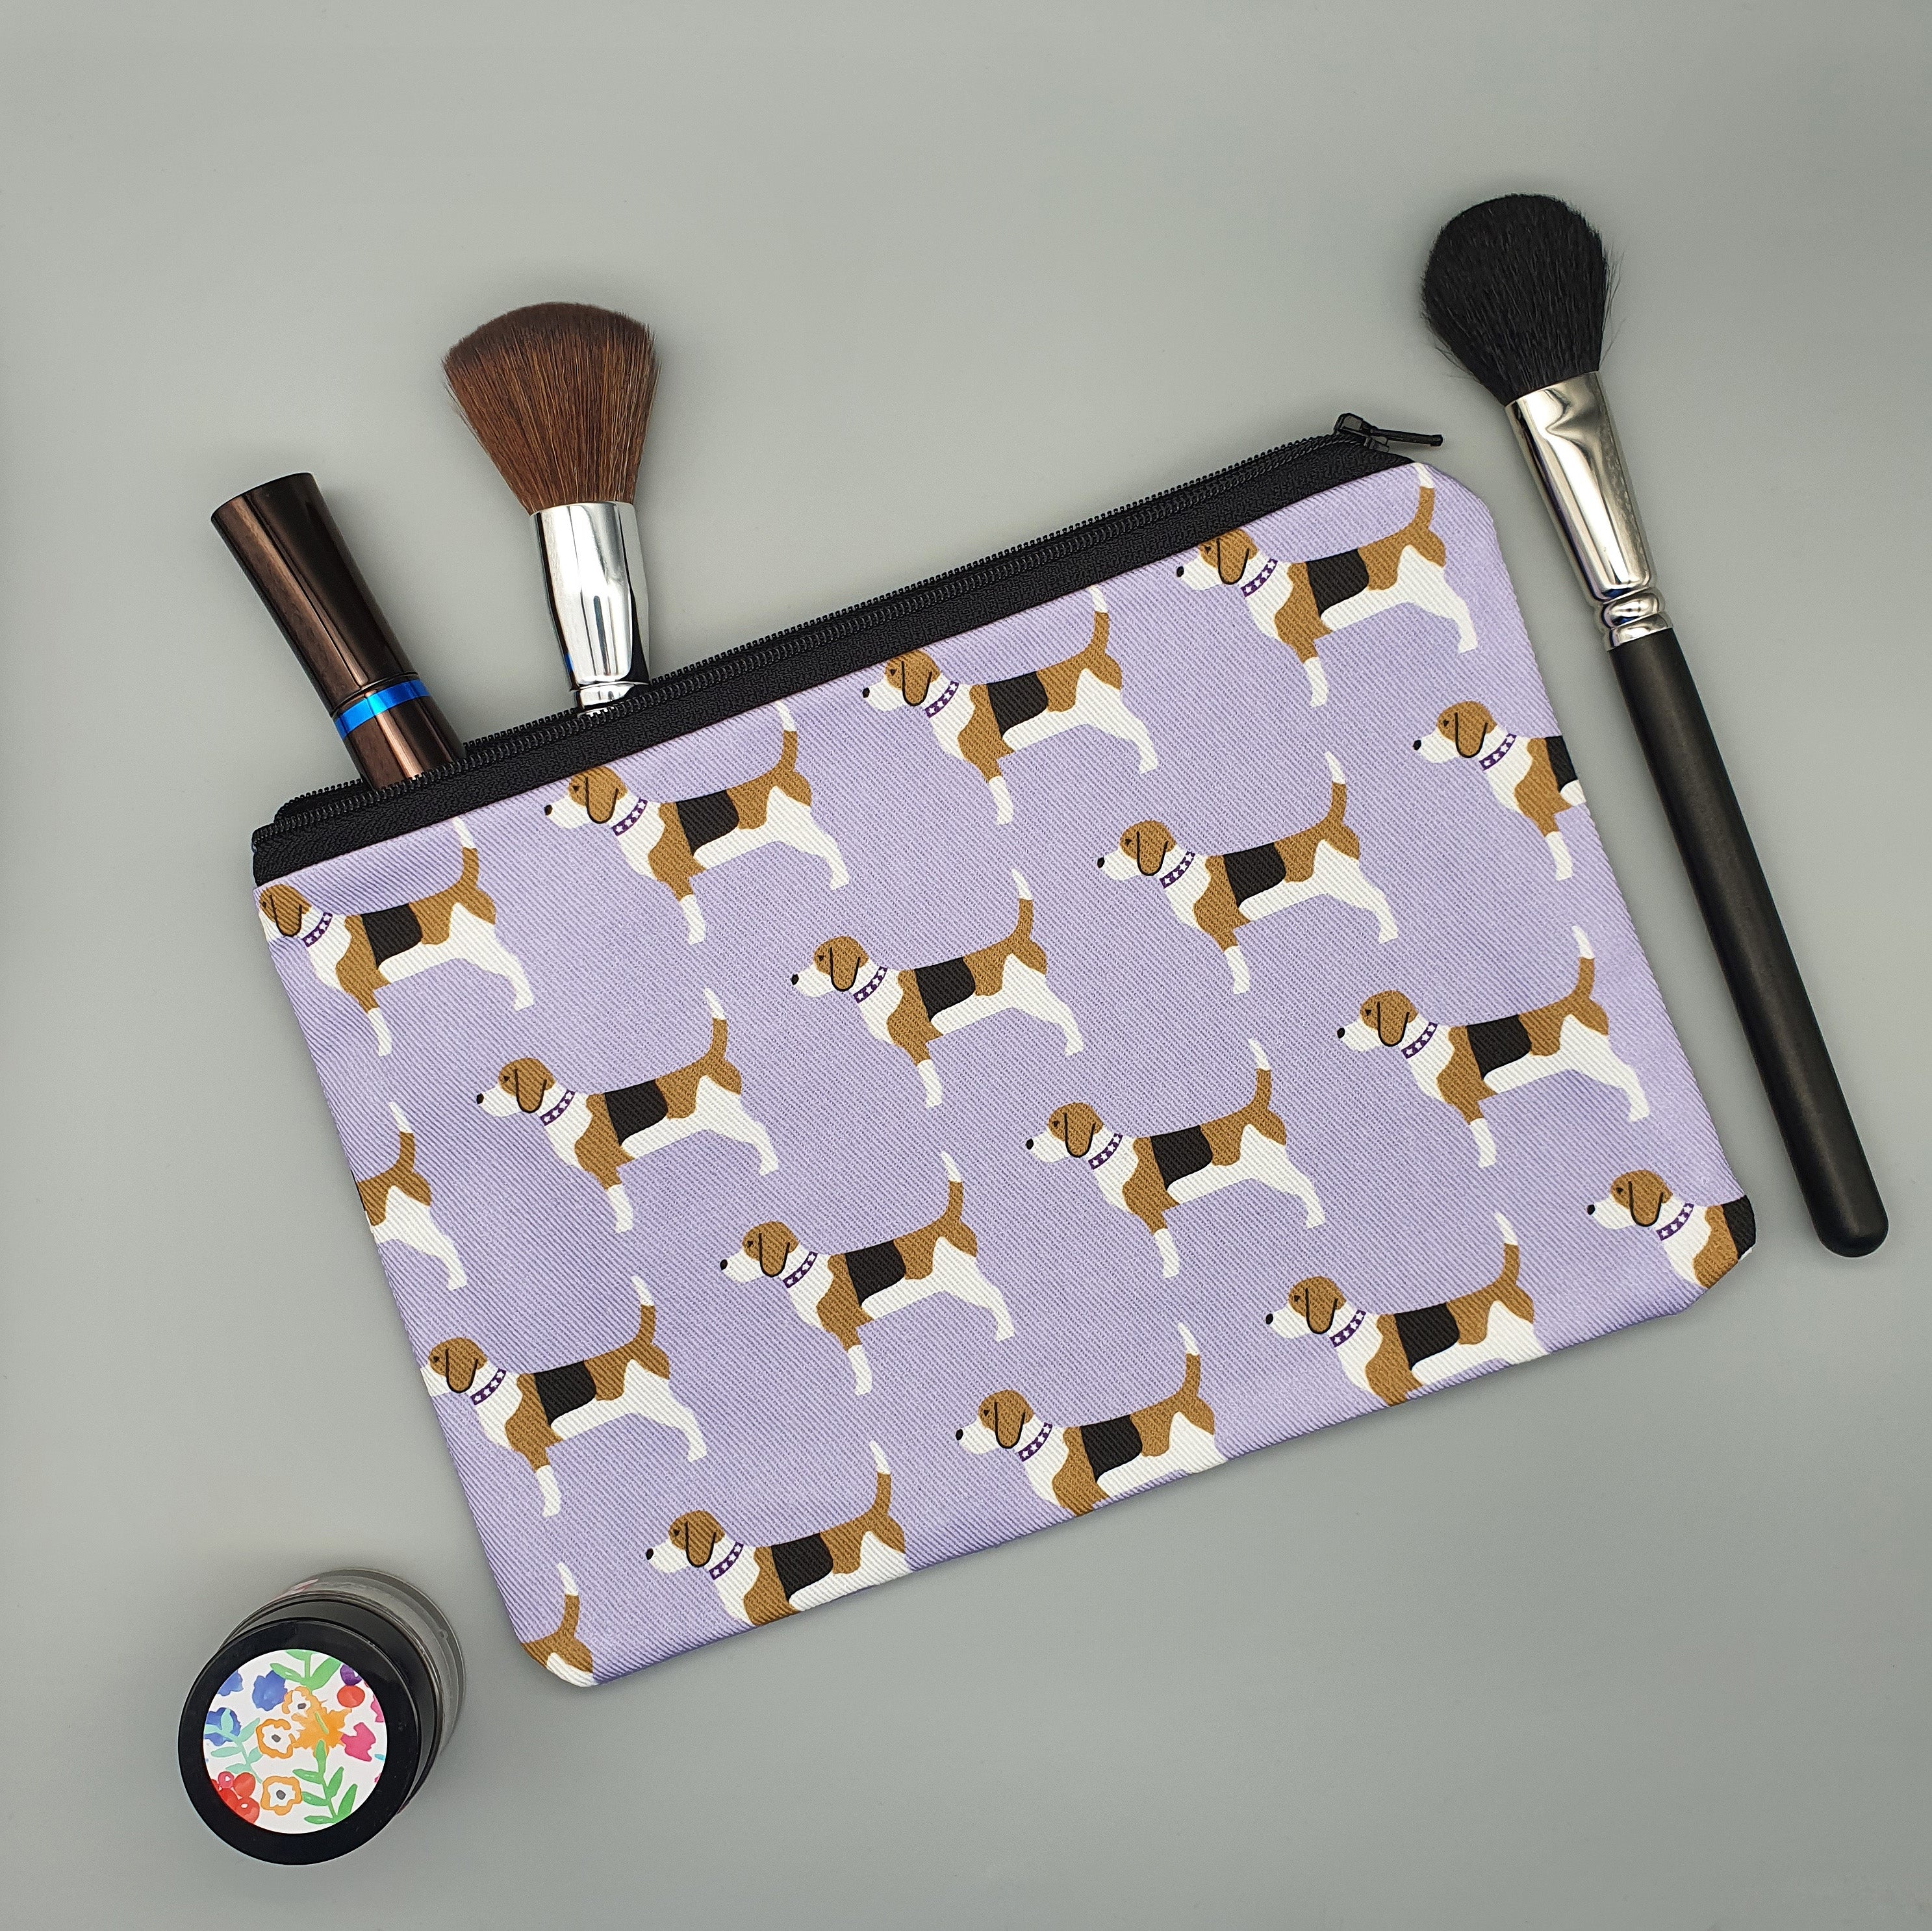 Beagle cotton accessories bag used as makeup bag